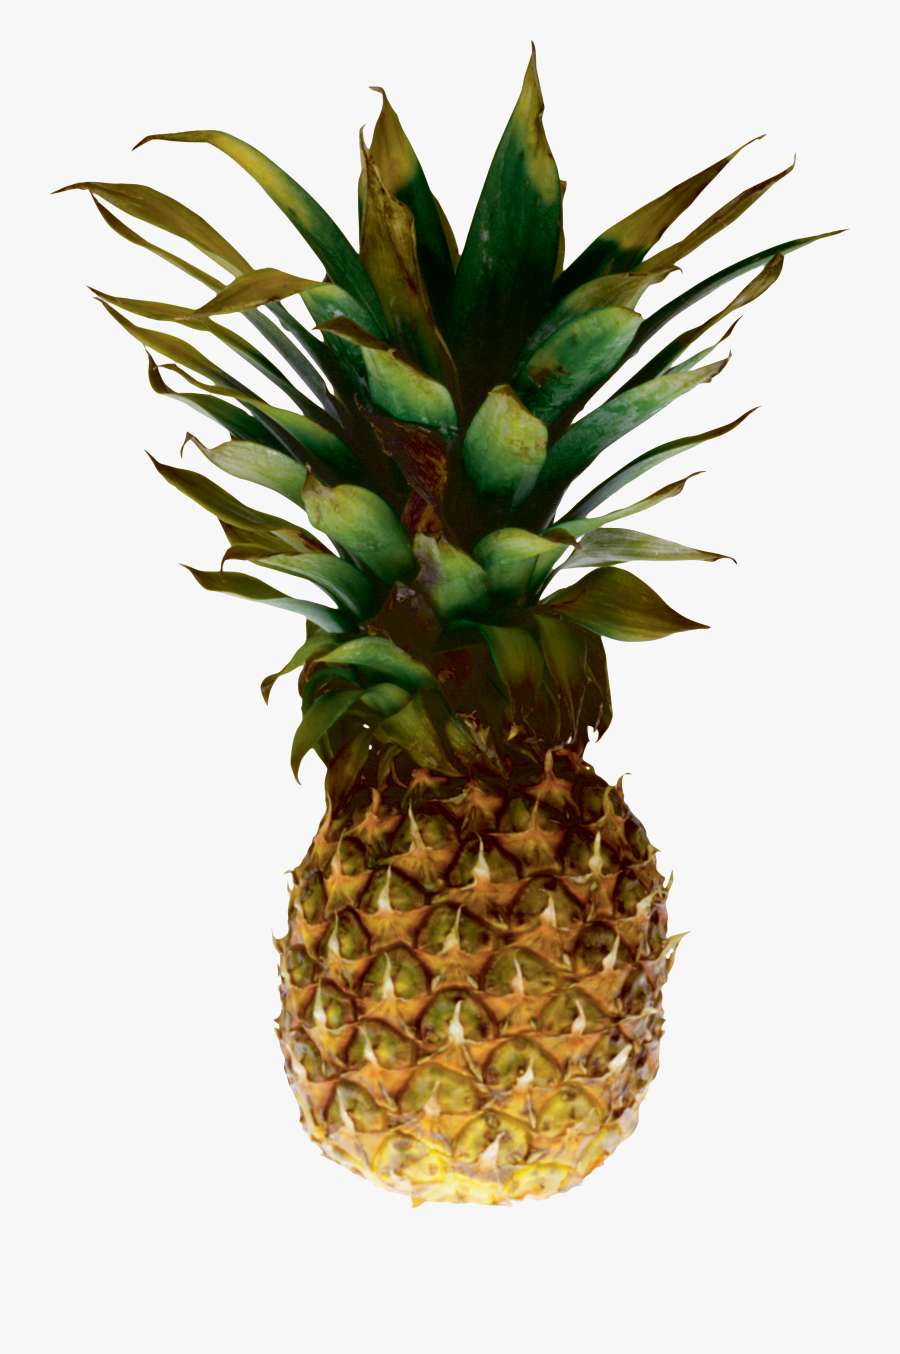 Juice Pineapple Clip Art - Pineapple Image No Background, Transparent Clipart